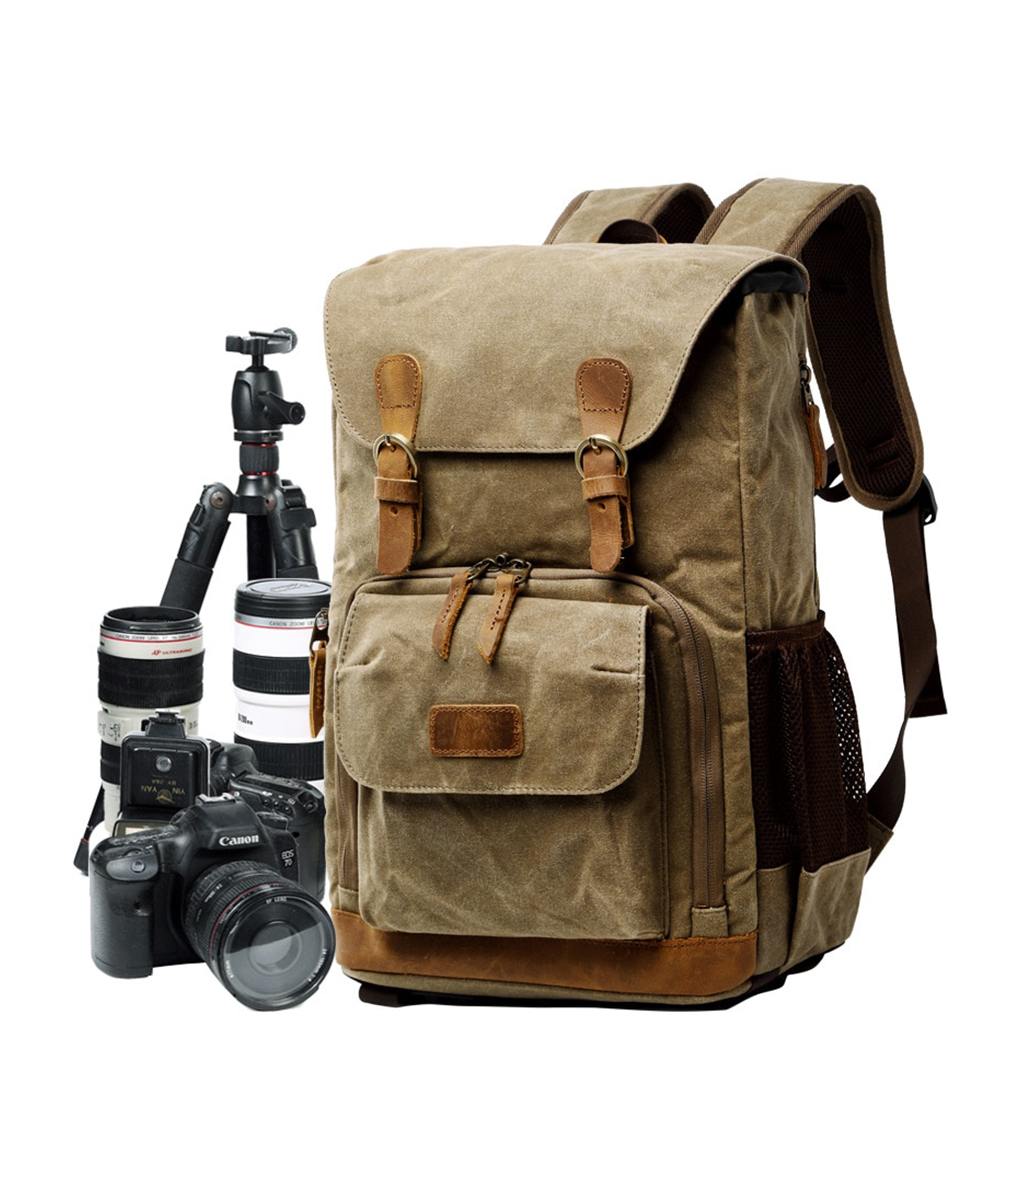 Batik Canvas Waterproof Photography Bag Outdoor Wear resistant Large Camera Photo Backpack Men for Nikon Canon 1 2